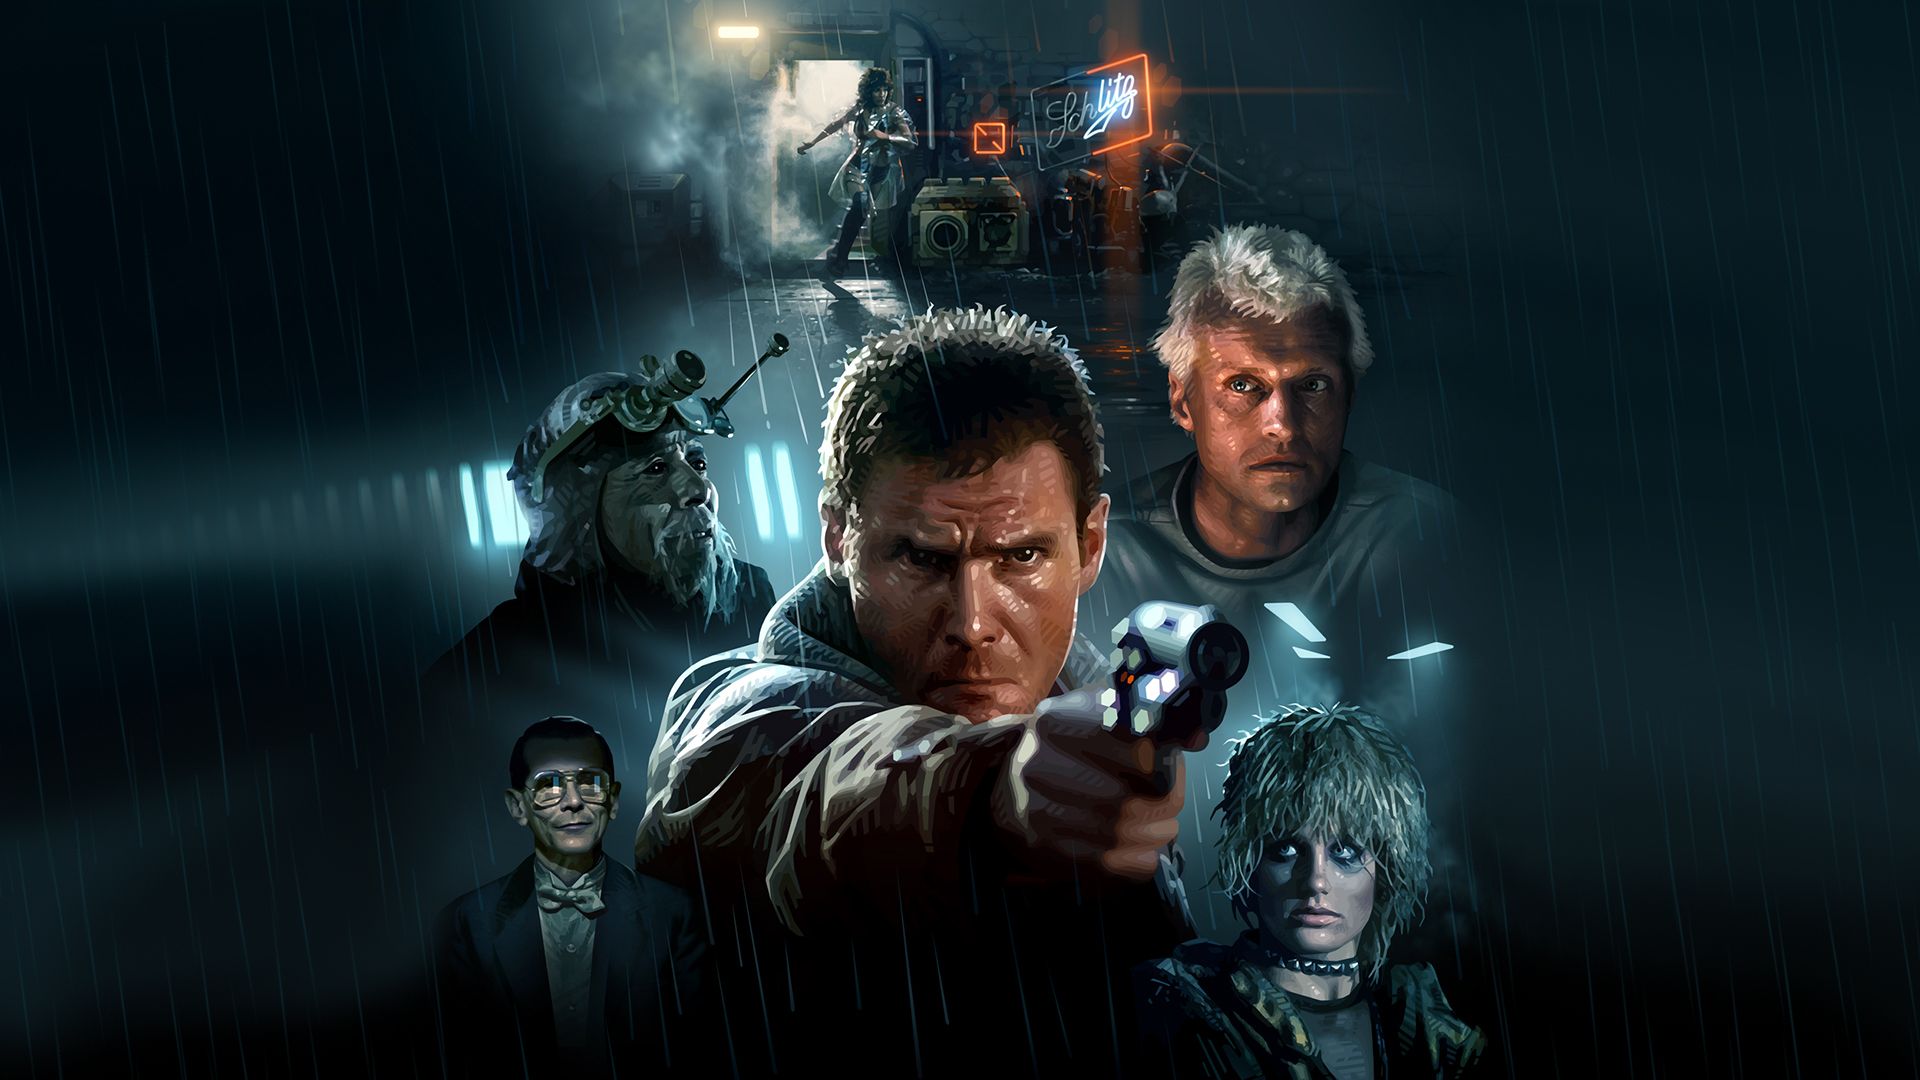 Blade Runner background